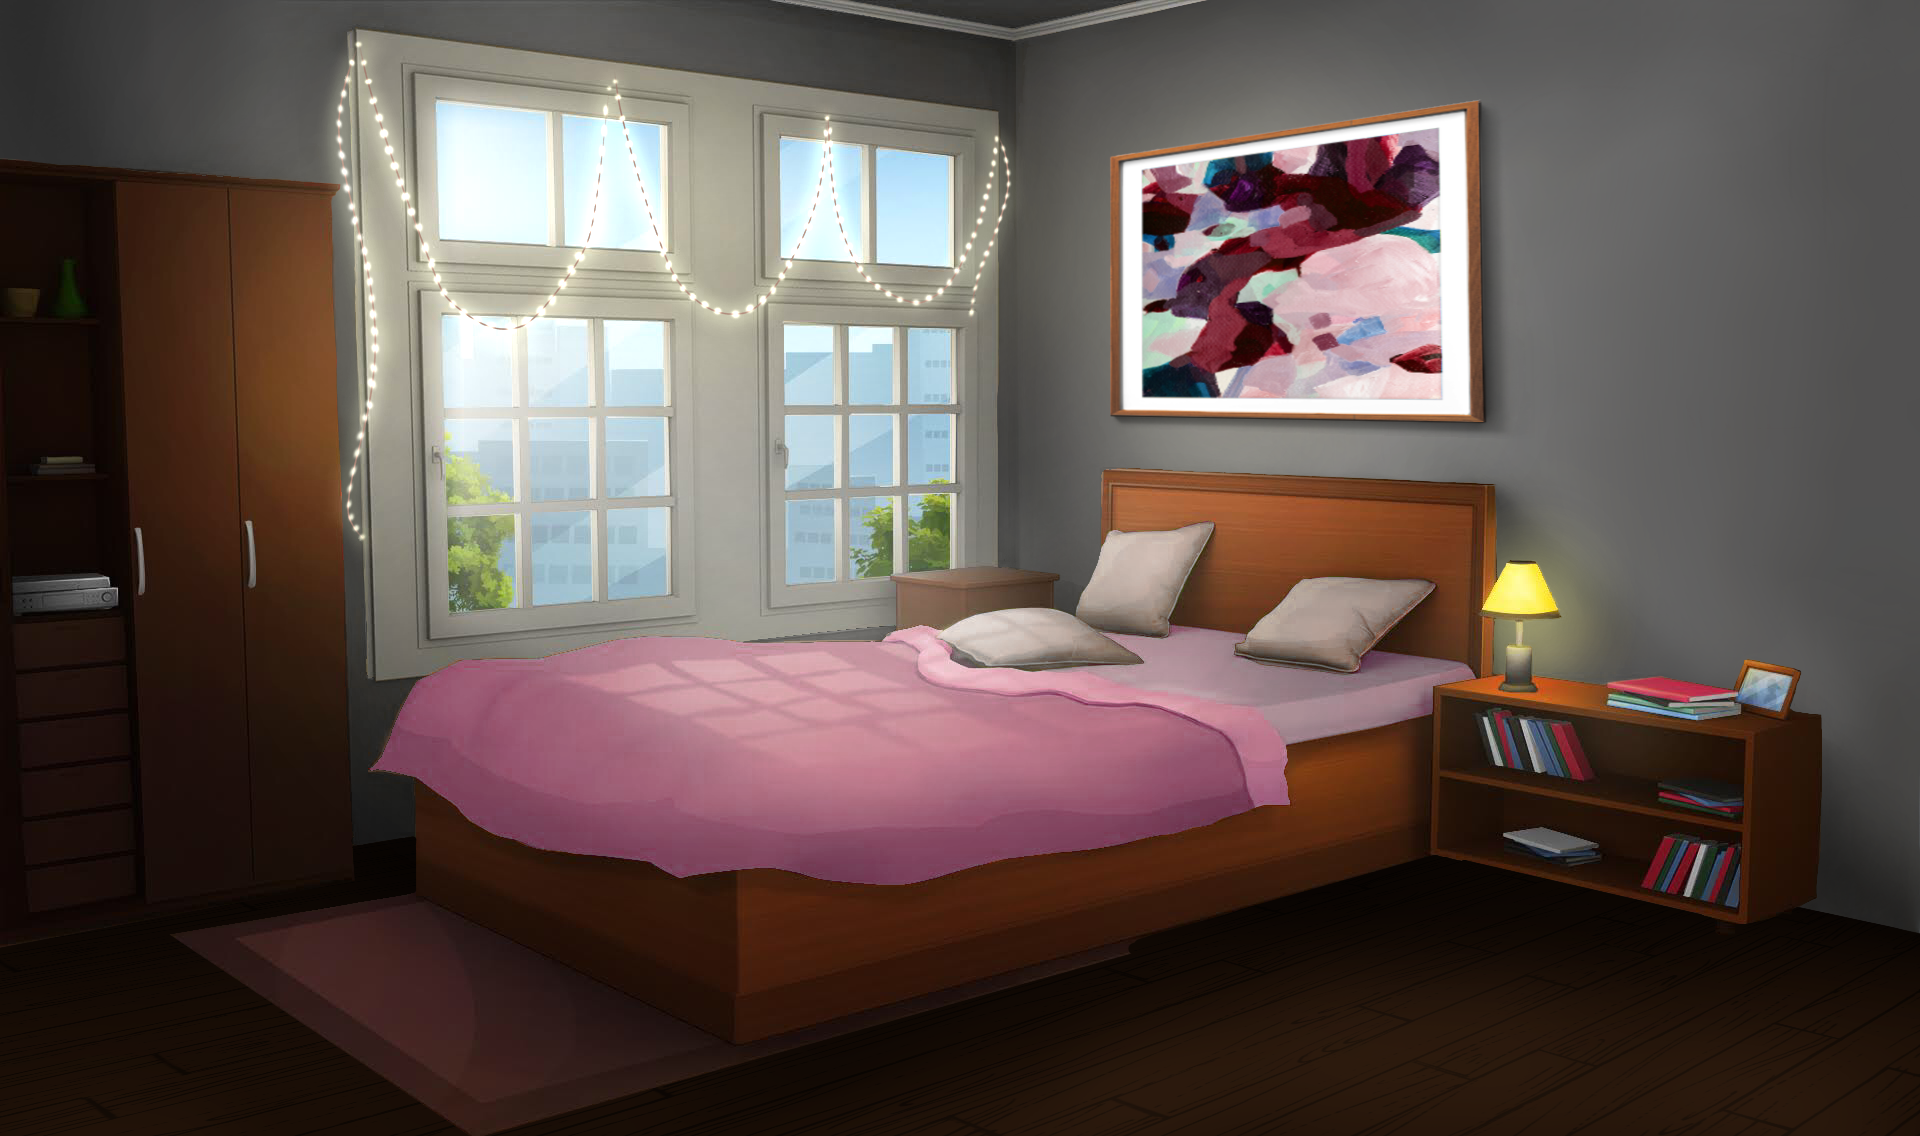 Anime Bedroom Background Images - Free Download on Freepik-demhanvico.com.vn